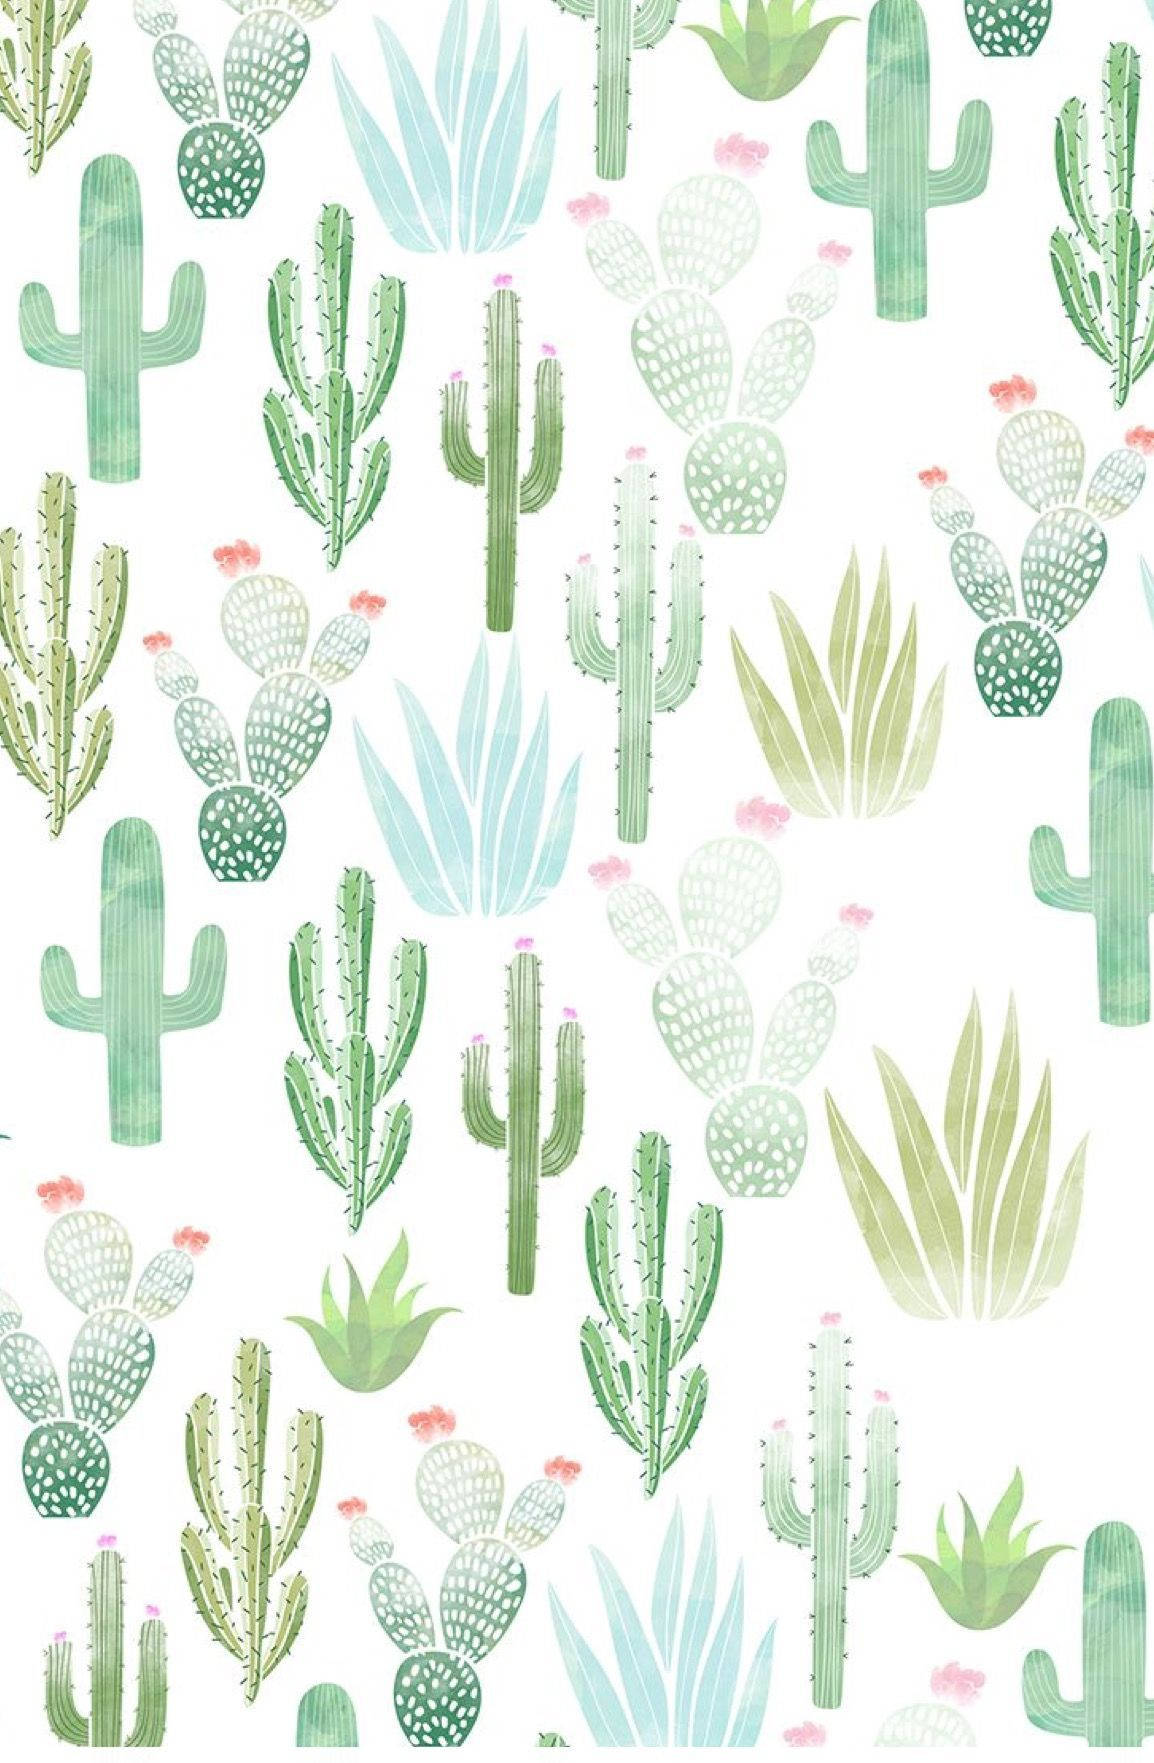 Pastel Cactus Patter Design Mobile Wallpaper